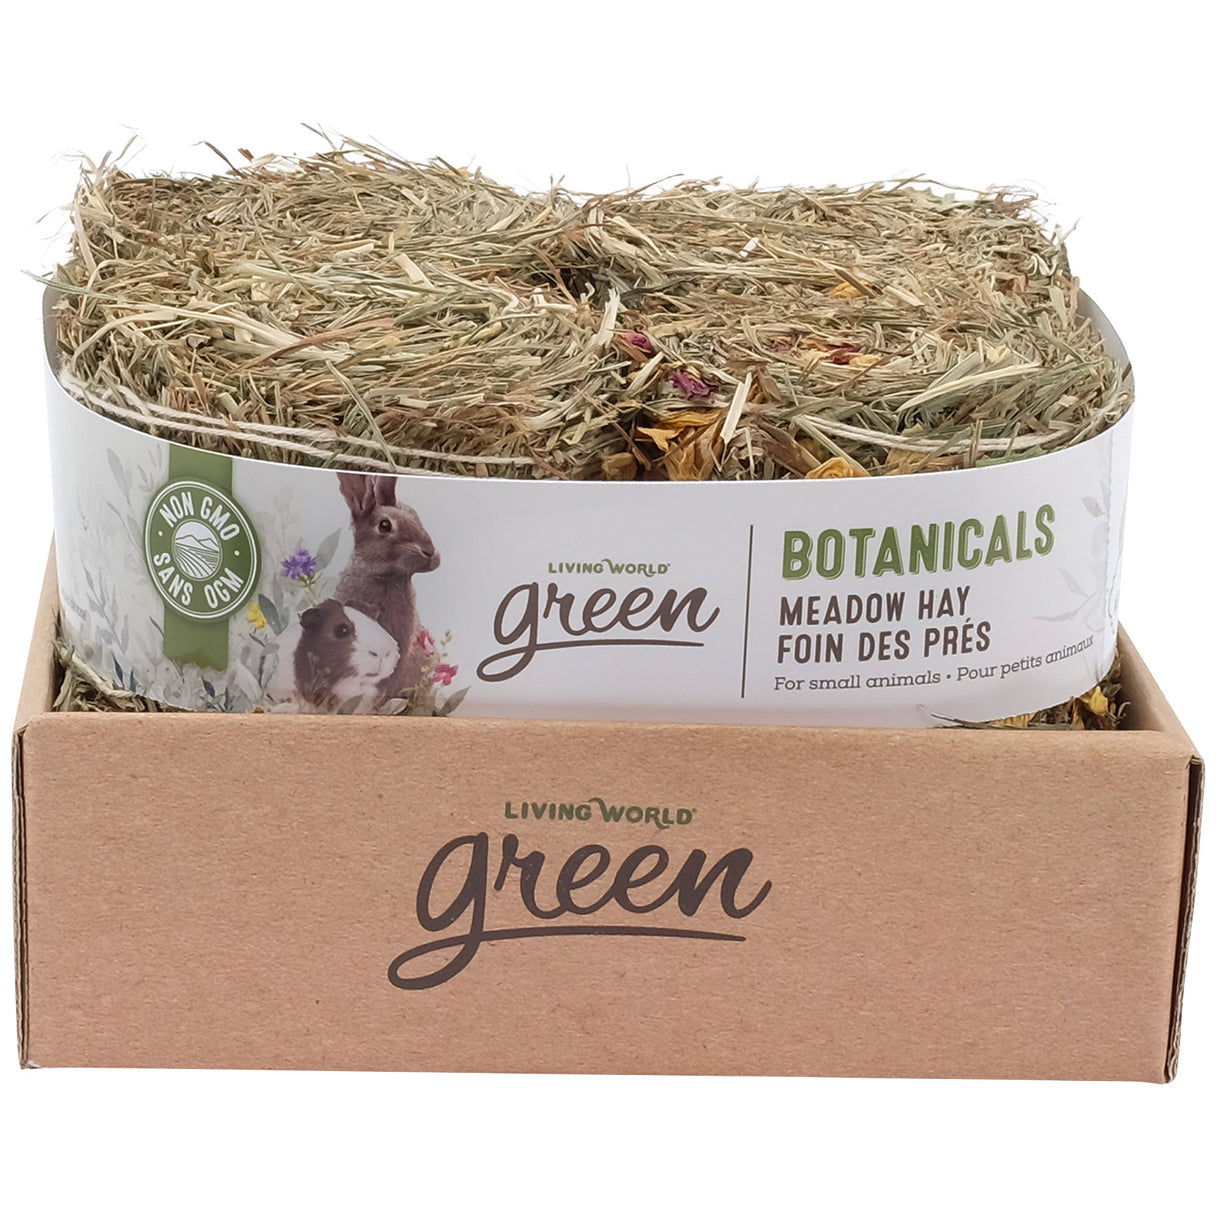 Living World® Green Botanicals Meadow Hay 150g 4PK Bale